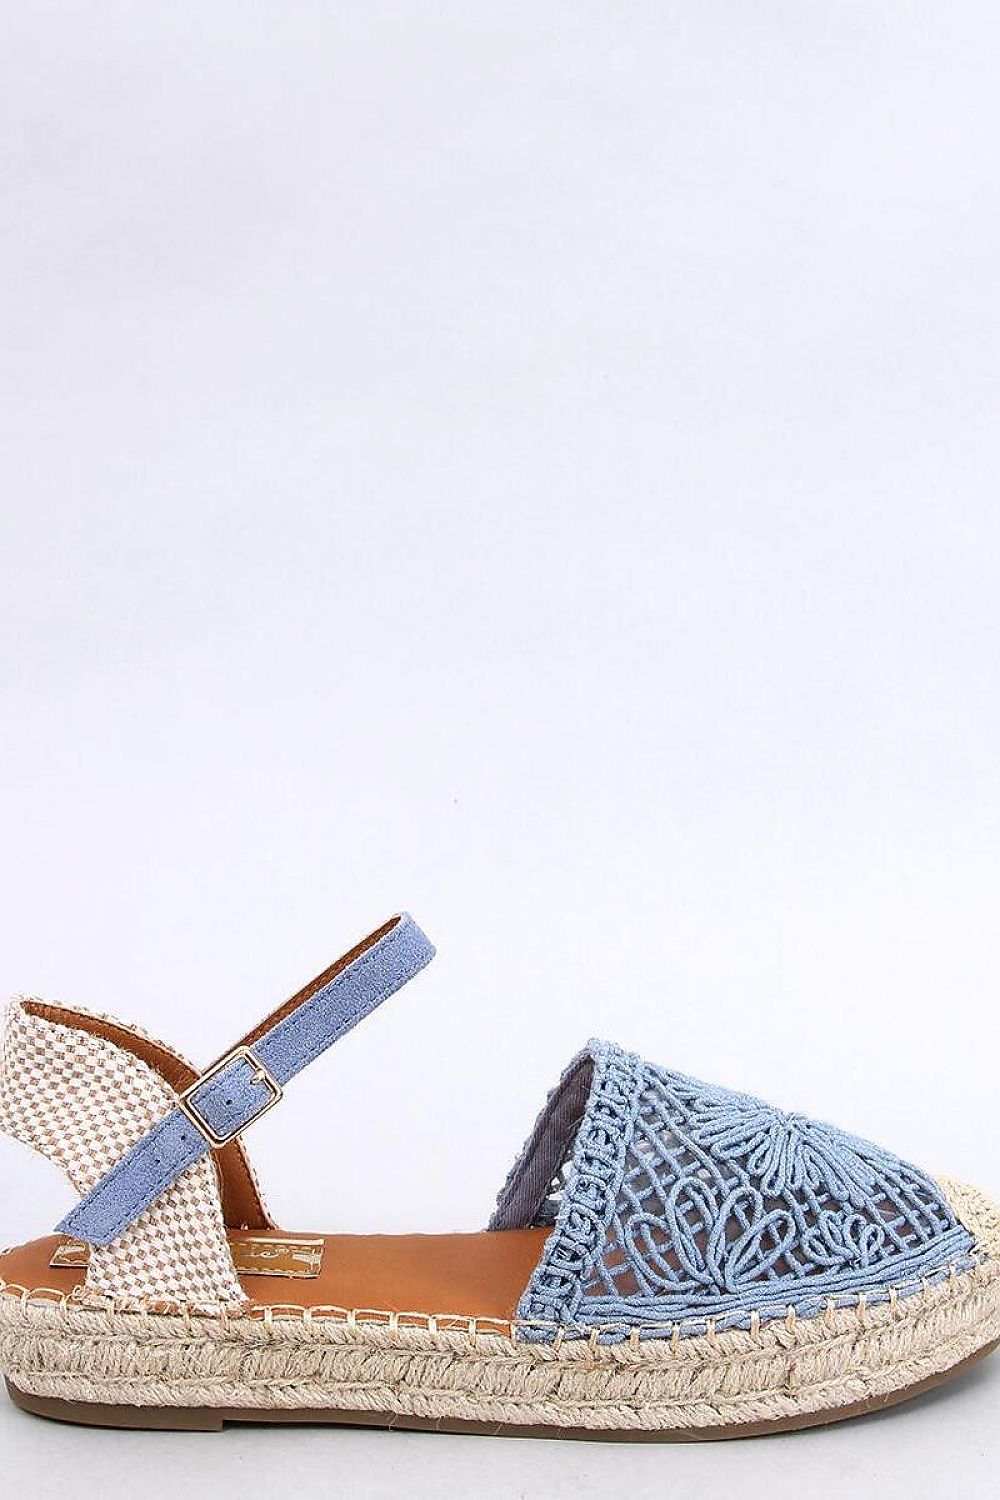 TEEK - Blue Bloom Knit Espadrilles Sandals SHOES TEEK MH 6.5  